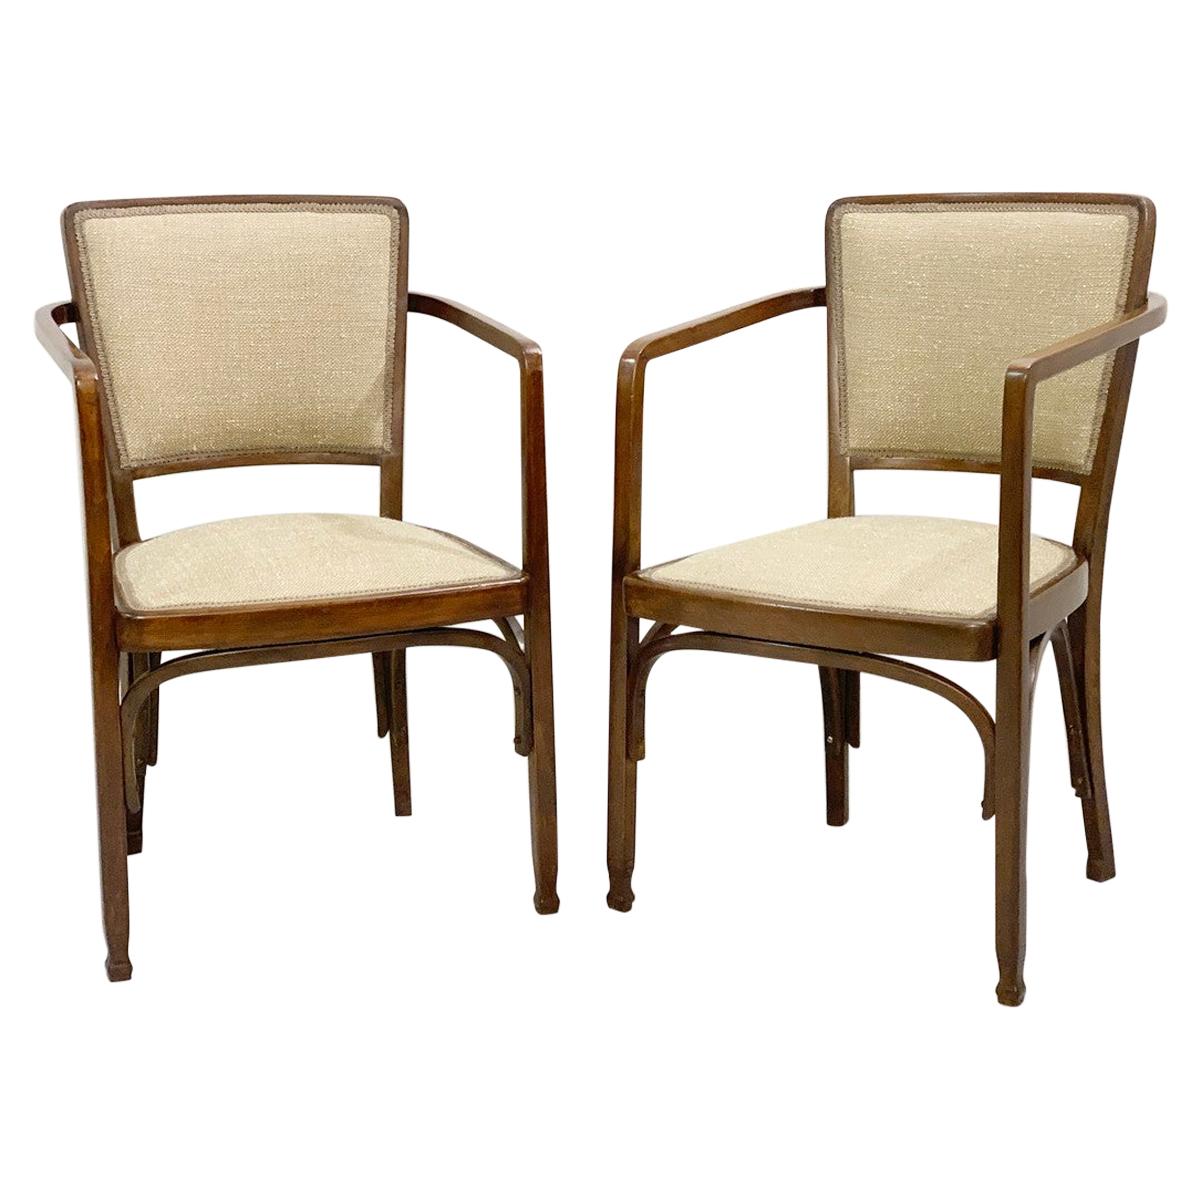 Pair of Gustav Siegel Chairs for J & J Kohn, Vienna Secession